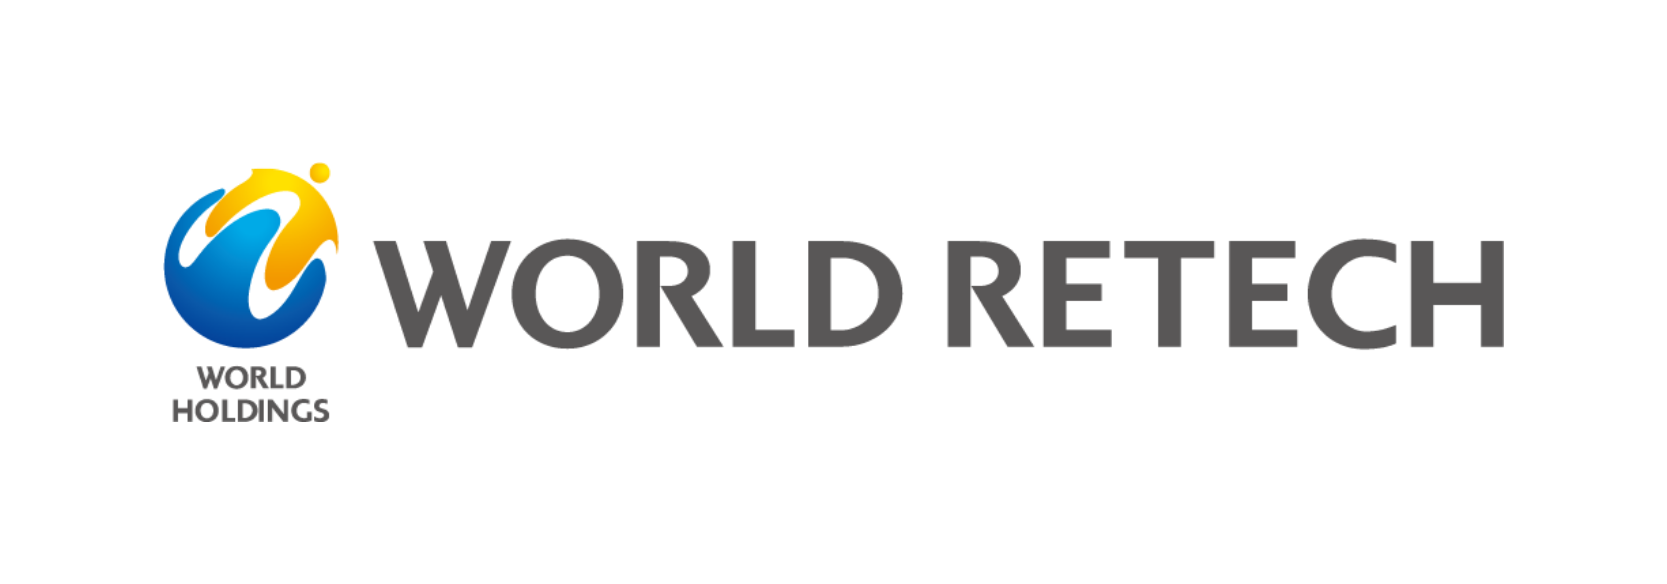 WORLD RETECH CO., LTD.